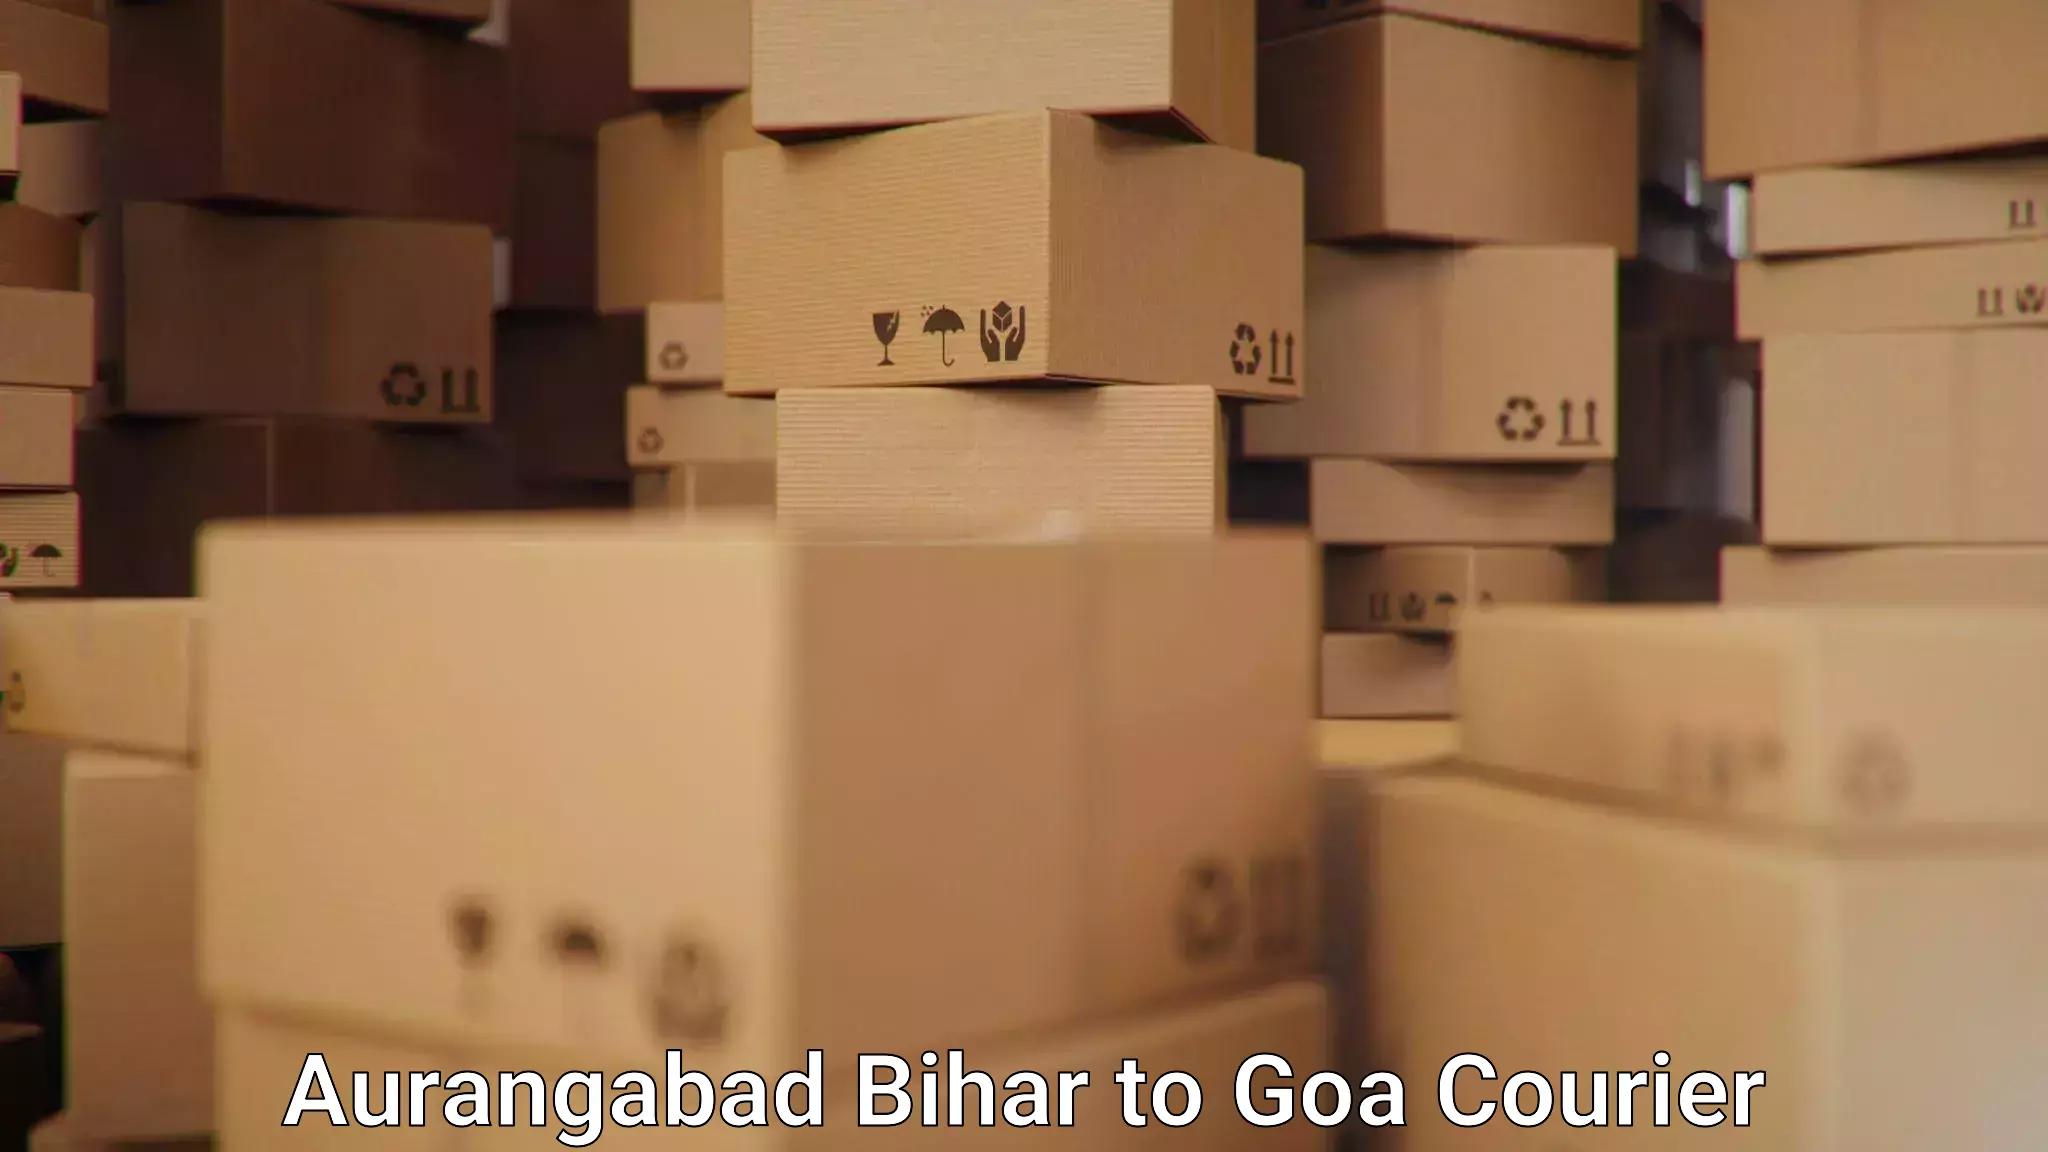 International parcel service Aurangabad Bihar to South Goa